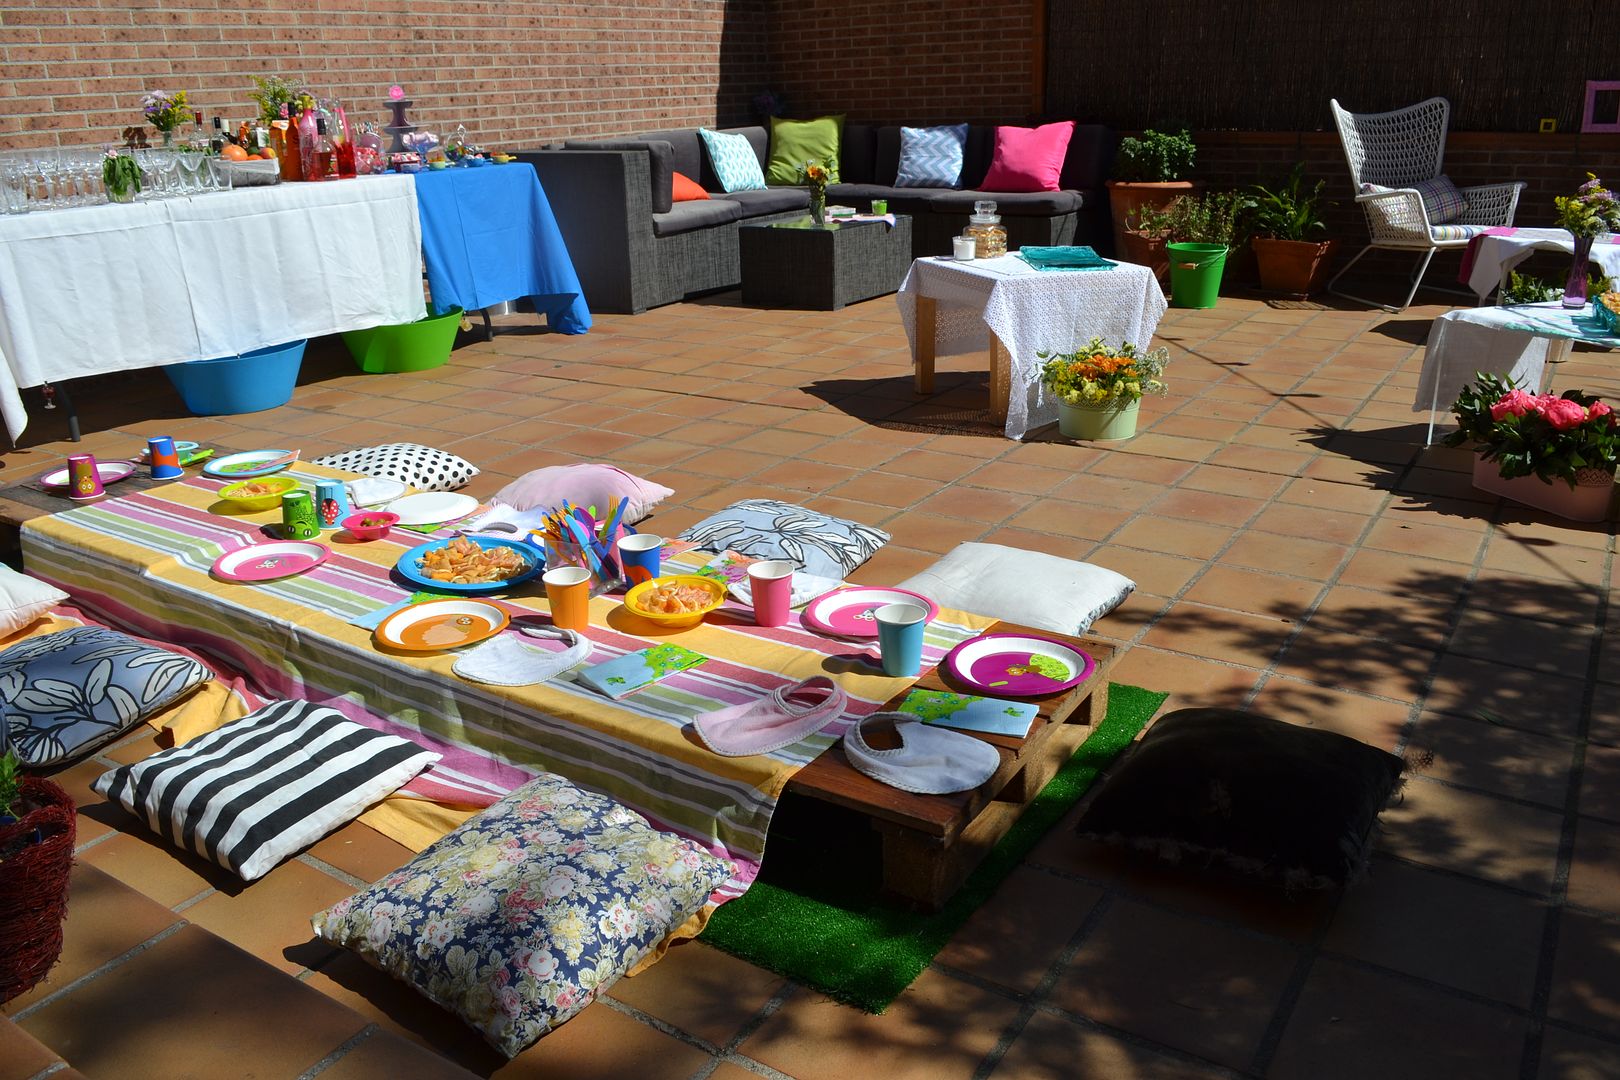  photo bautizo-terraza-buffet-casa-ideas-flores-colores2_zps0b3b42fe.jpg